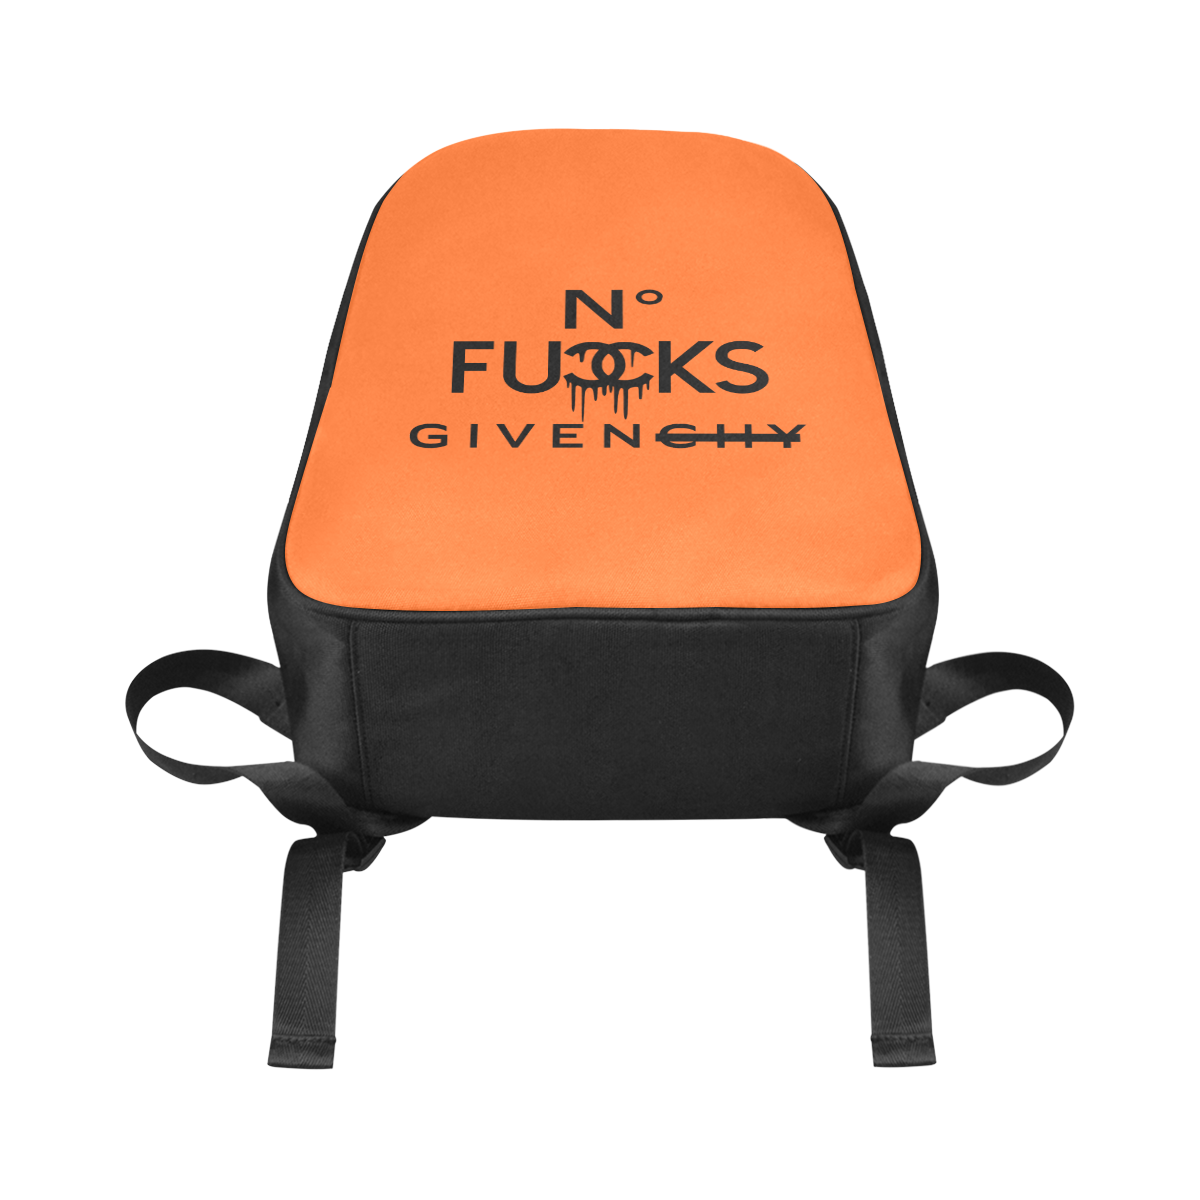 No F Given Orange Fabric School Backpack (Model 1682) (Large)